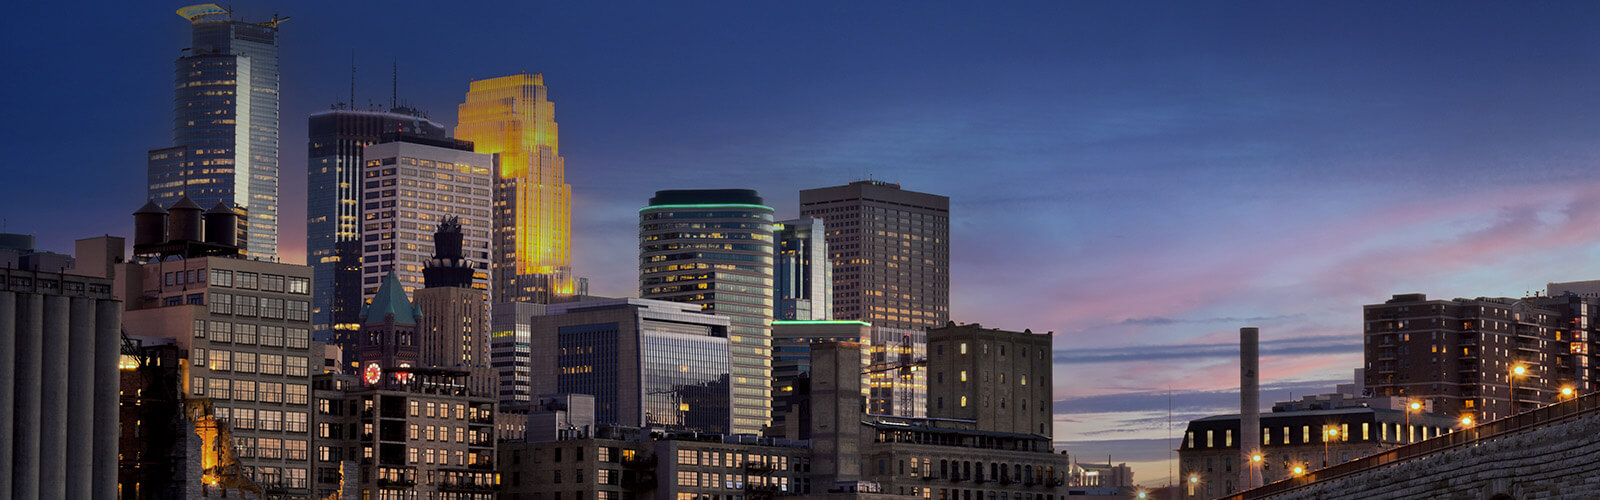 Downtown Minneapolis Skyline Image